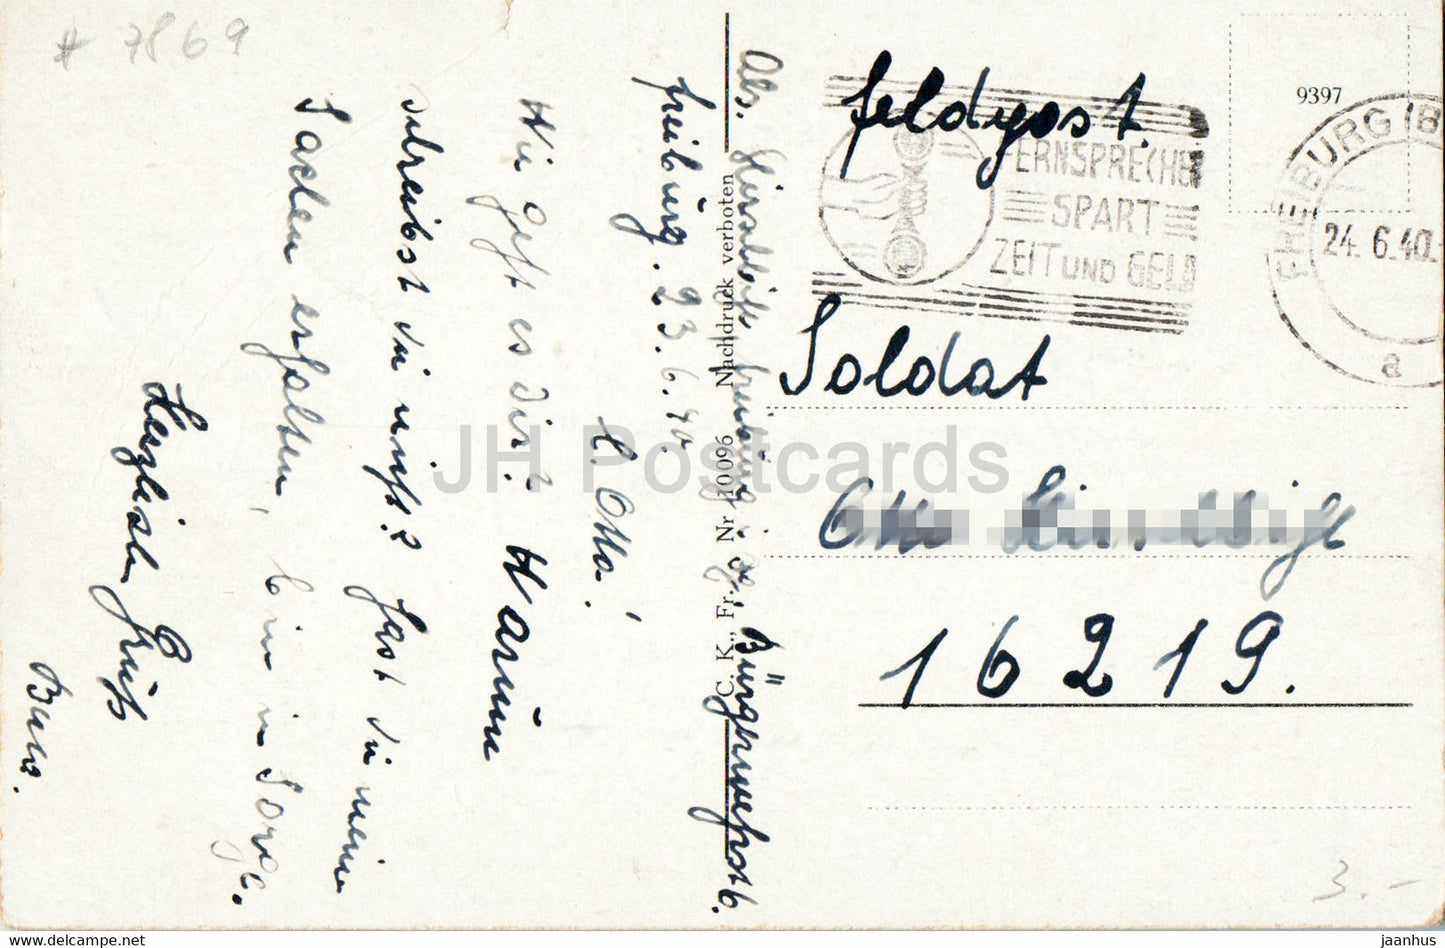 Blick ins Wiese Tal vom Feldberg aus - Wiesetal - Feldpost - courrier militaire - carte postale ancienne - 1940 - Allemagne - utilisé